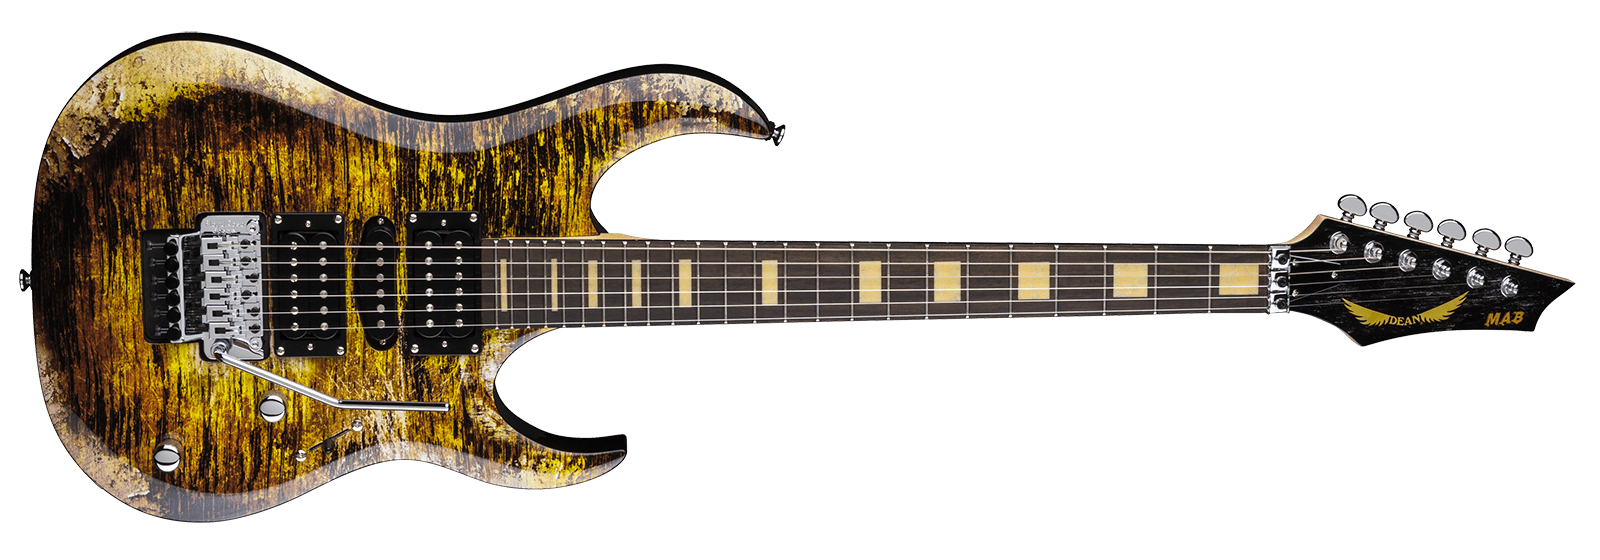 Dean Bass Show Namm Guitar Guitars Electric Clipart